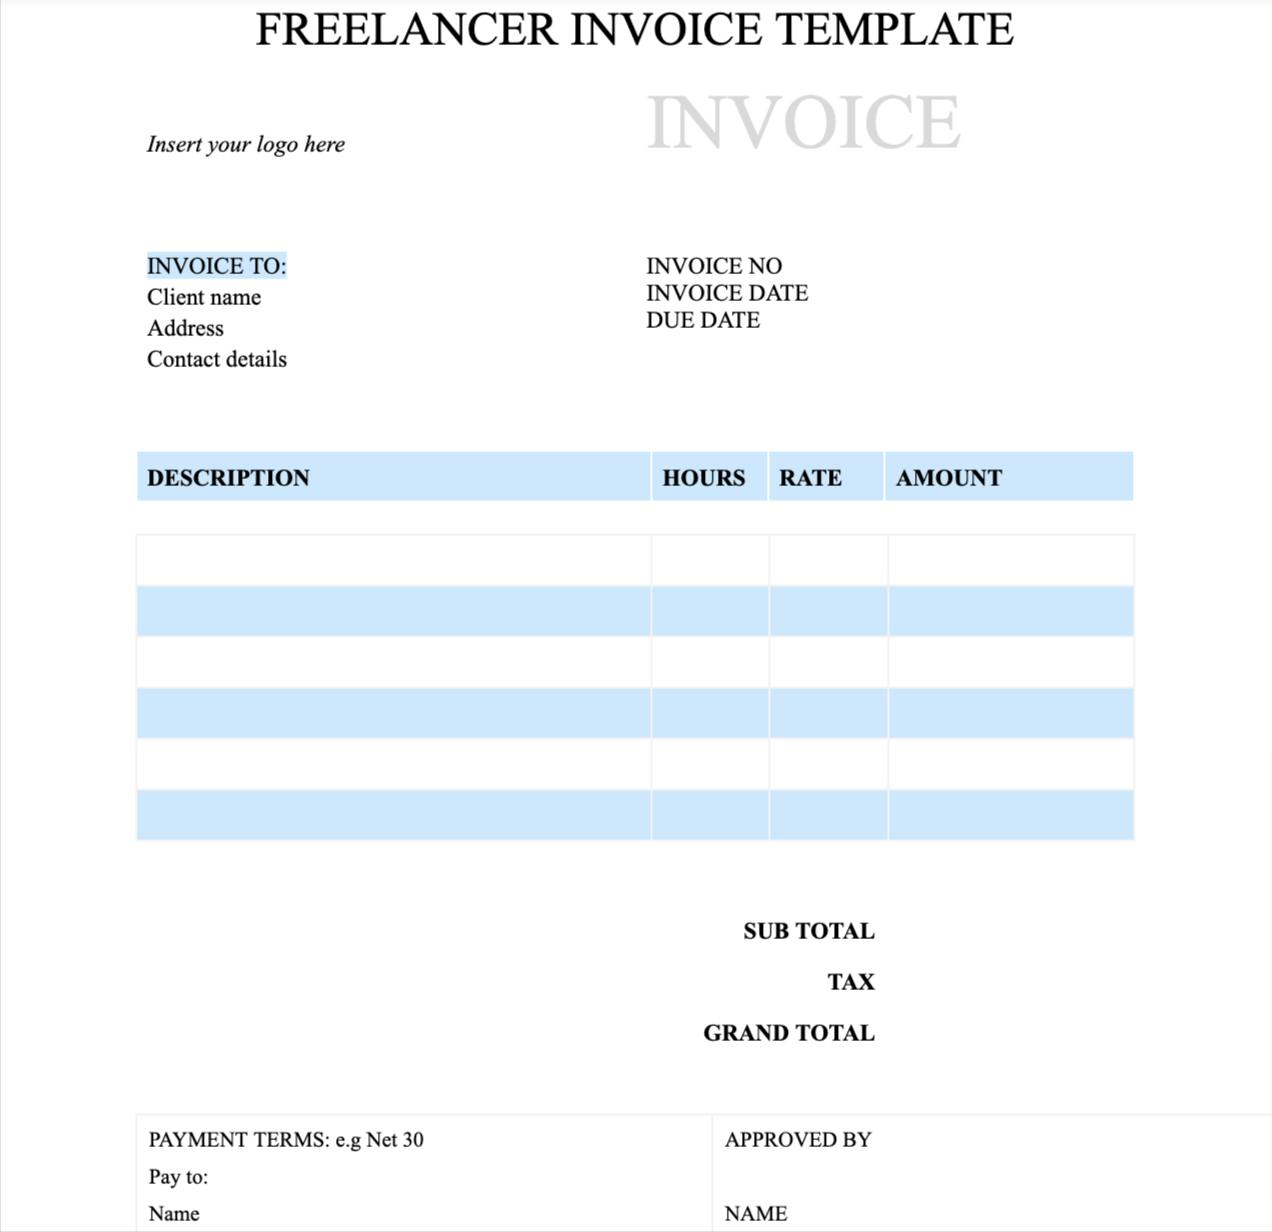 Freelancer invoice template in Google Docs